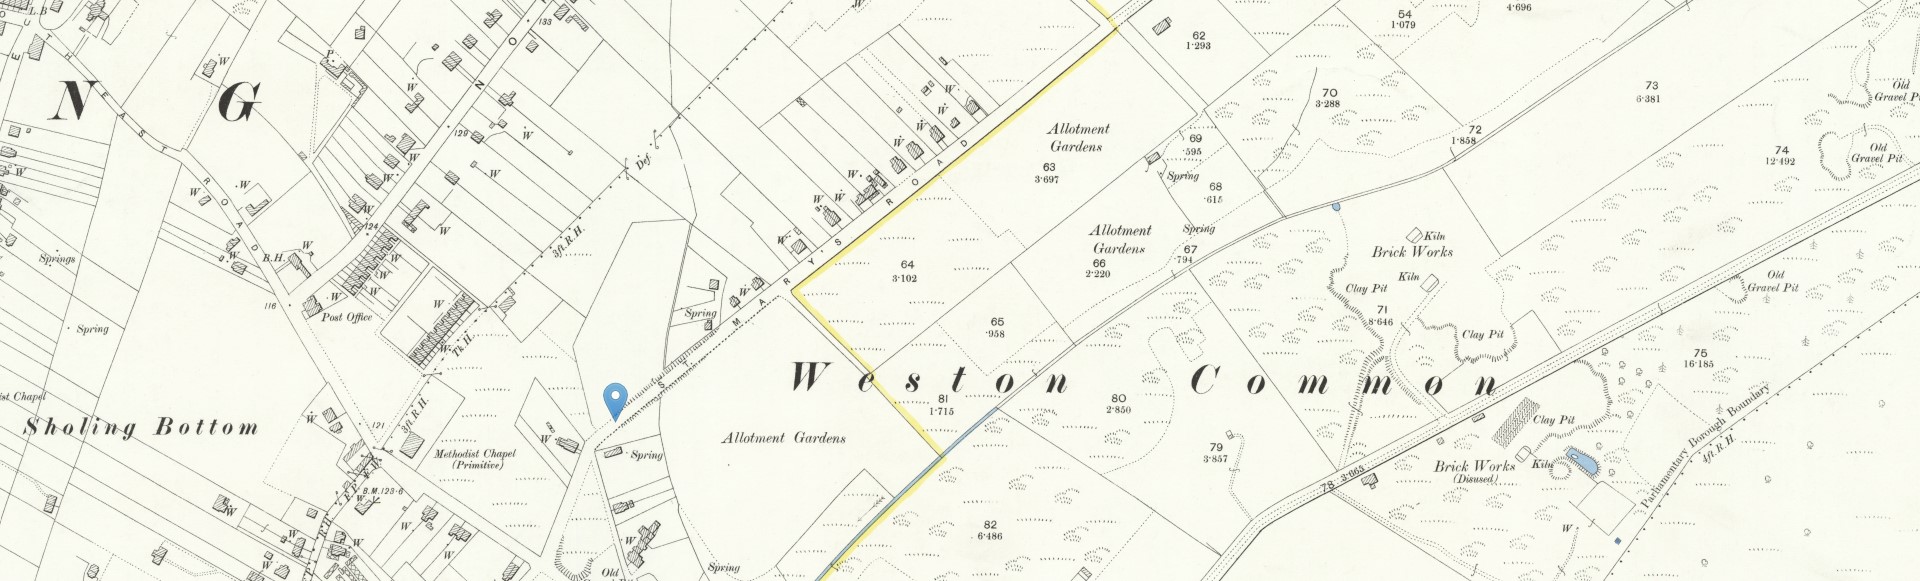 OS 25 Map Weston Common